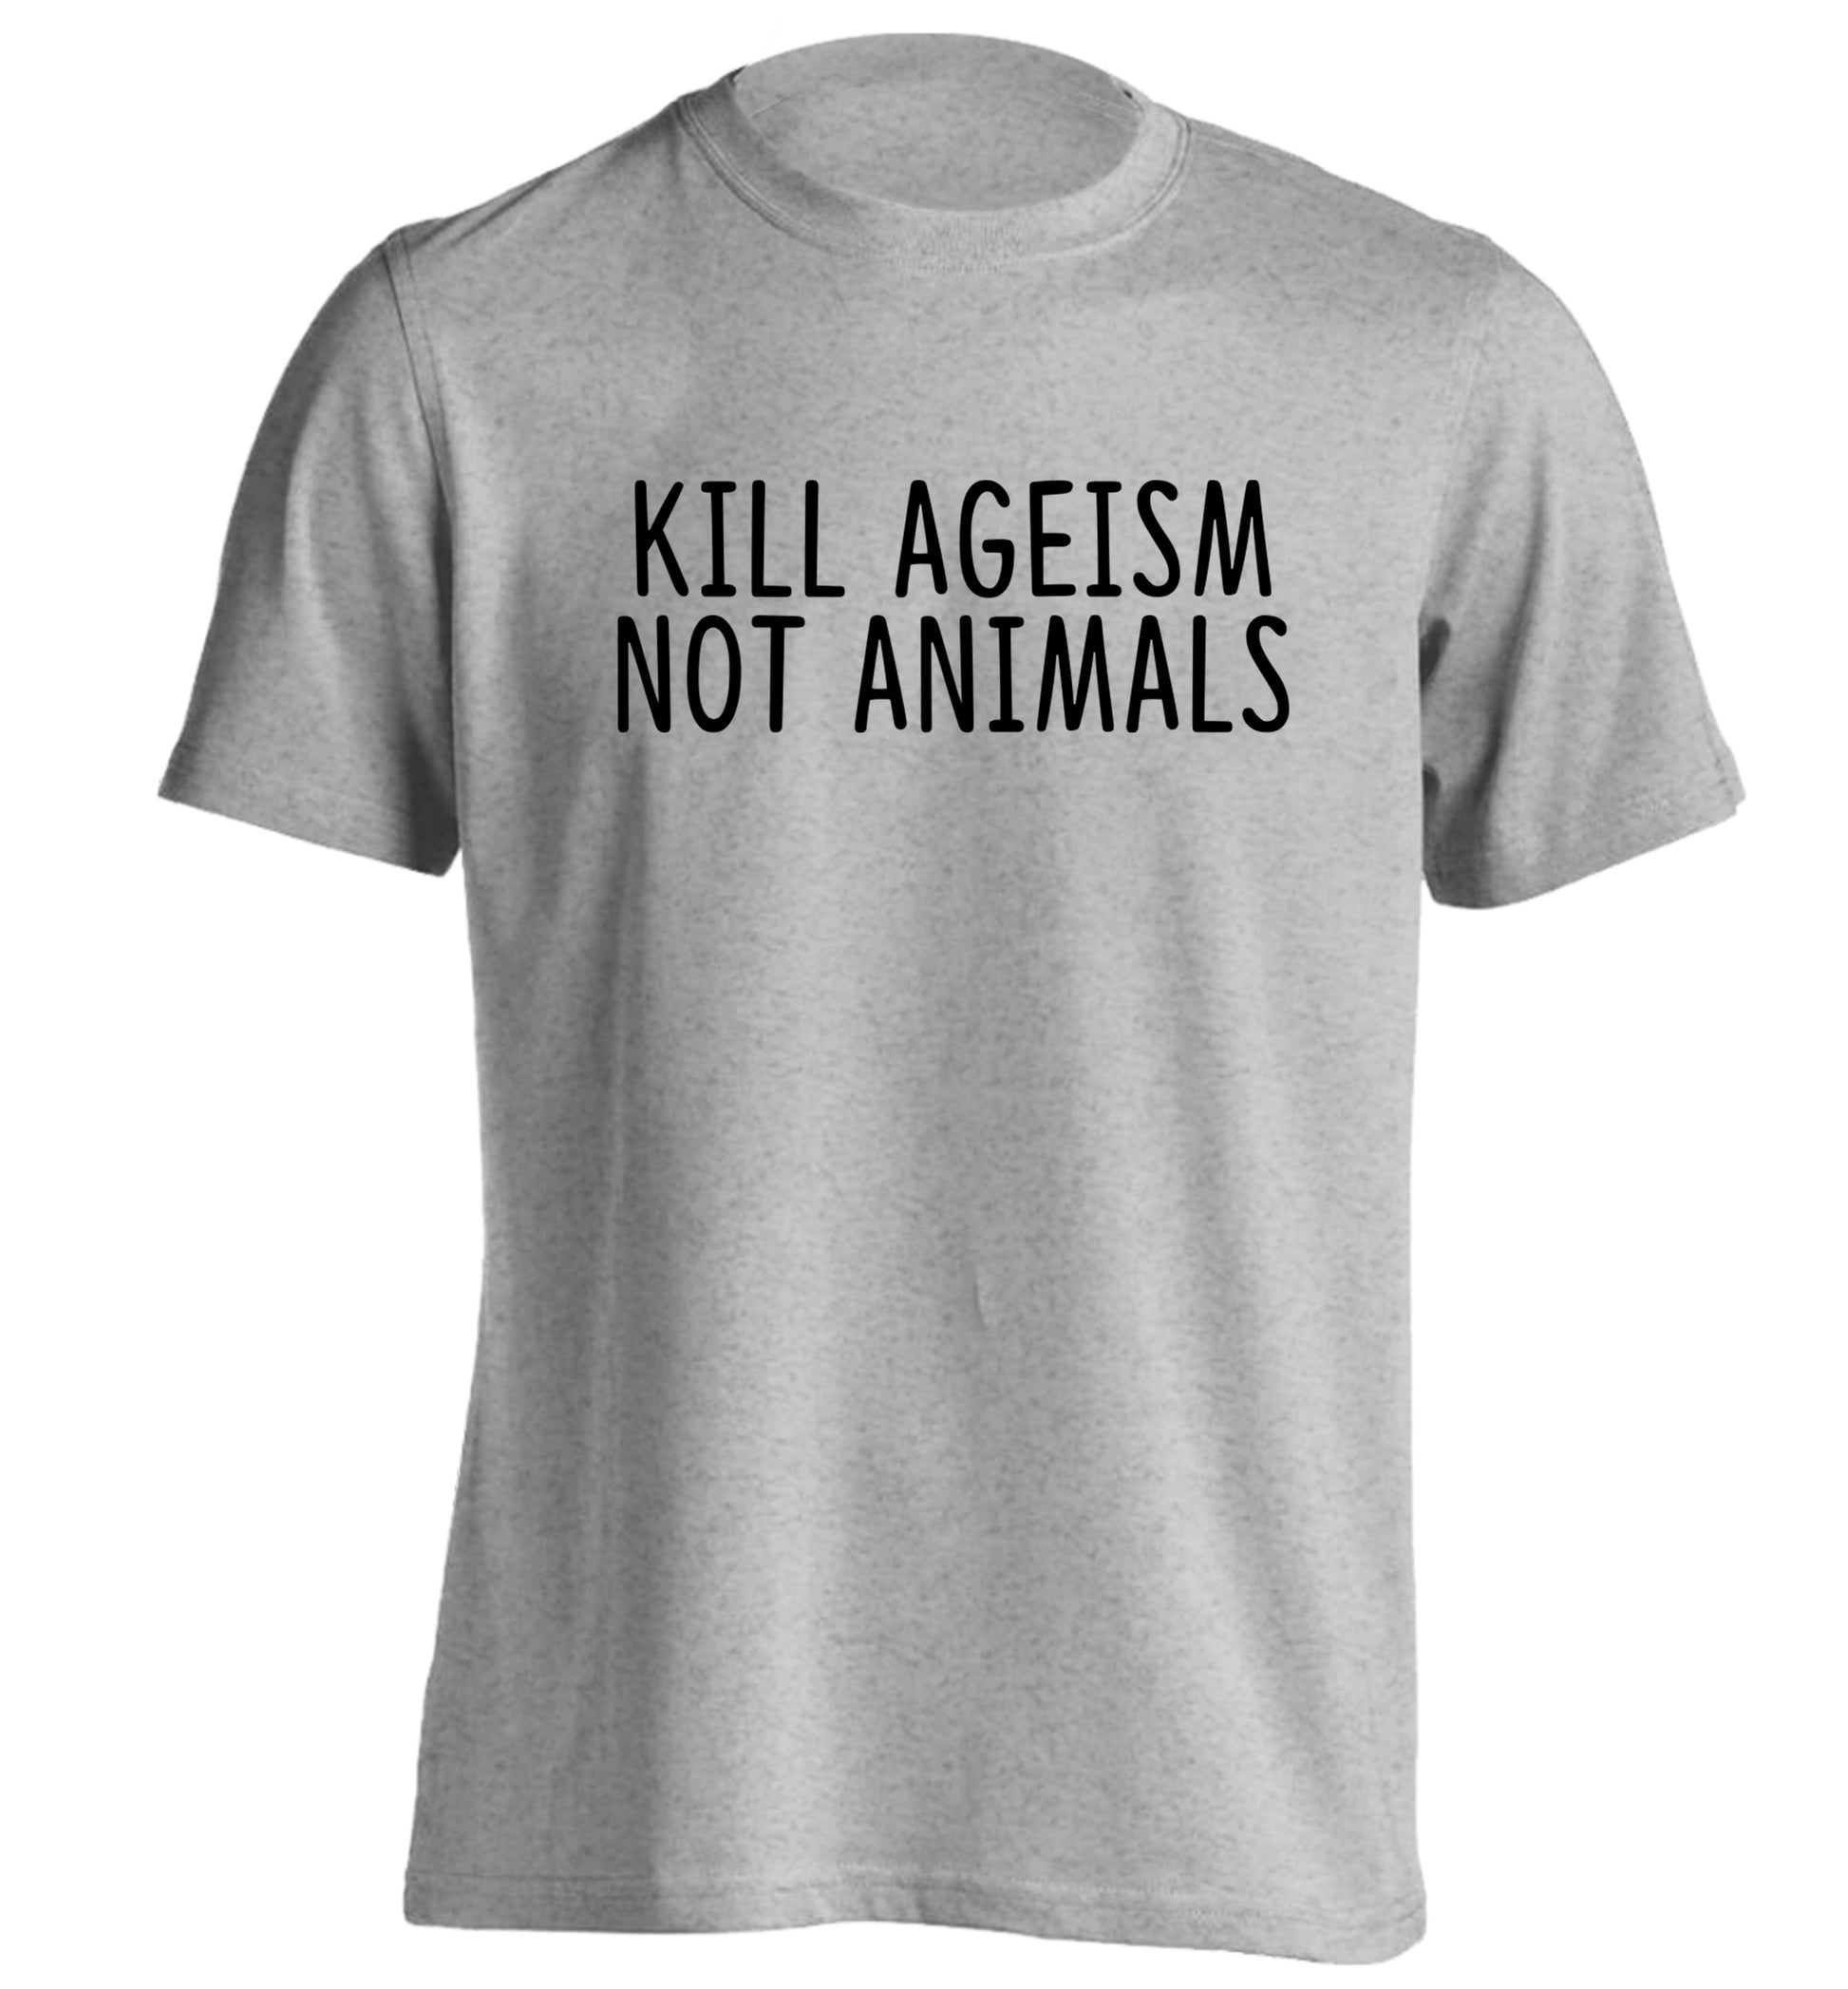 Kill Ageism Not Animals adults unisex grey Tshirt 2XL